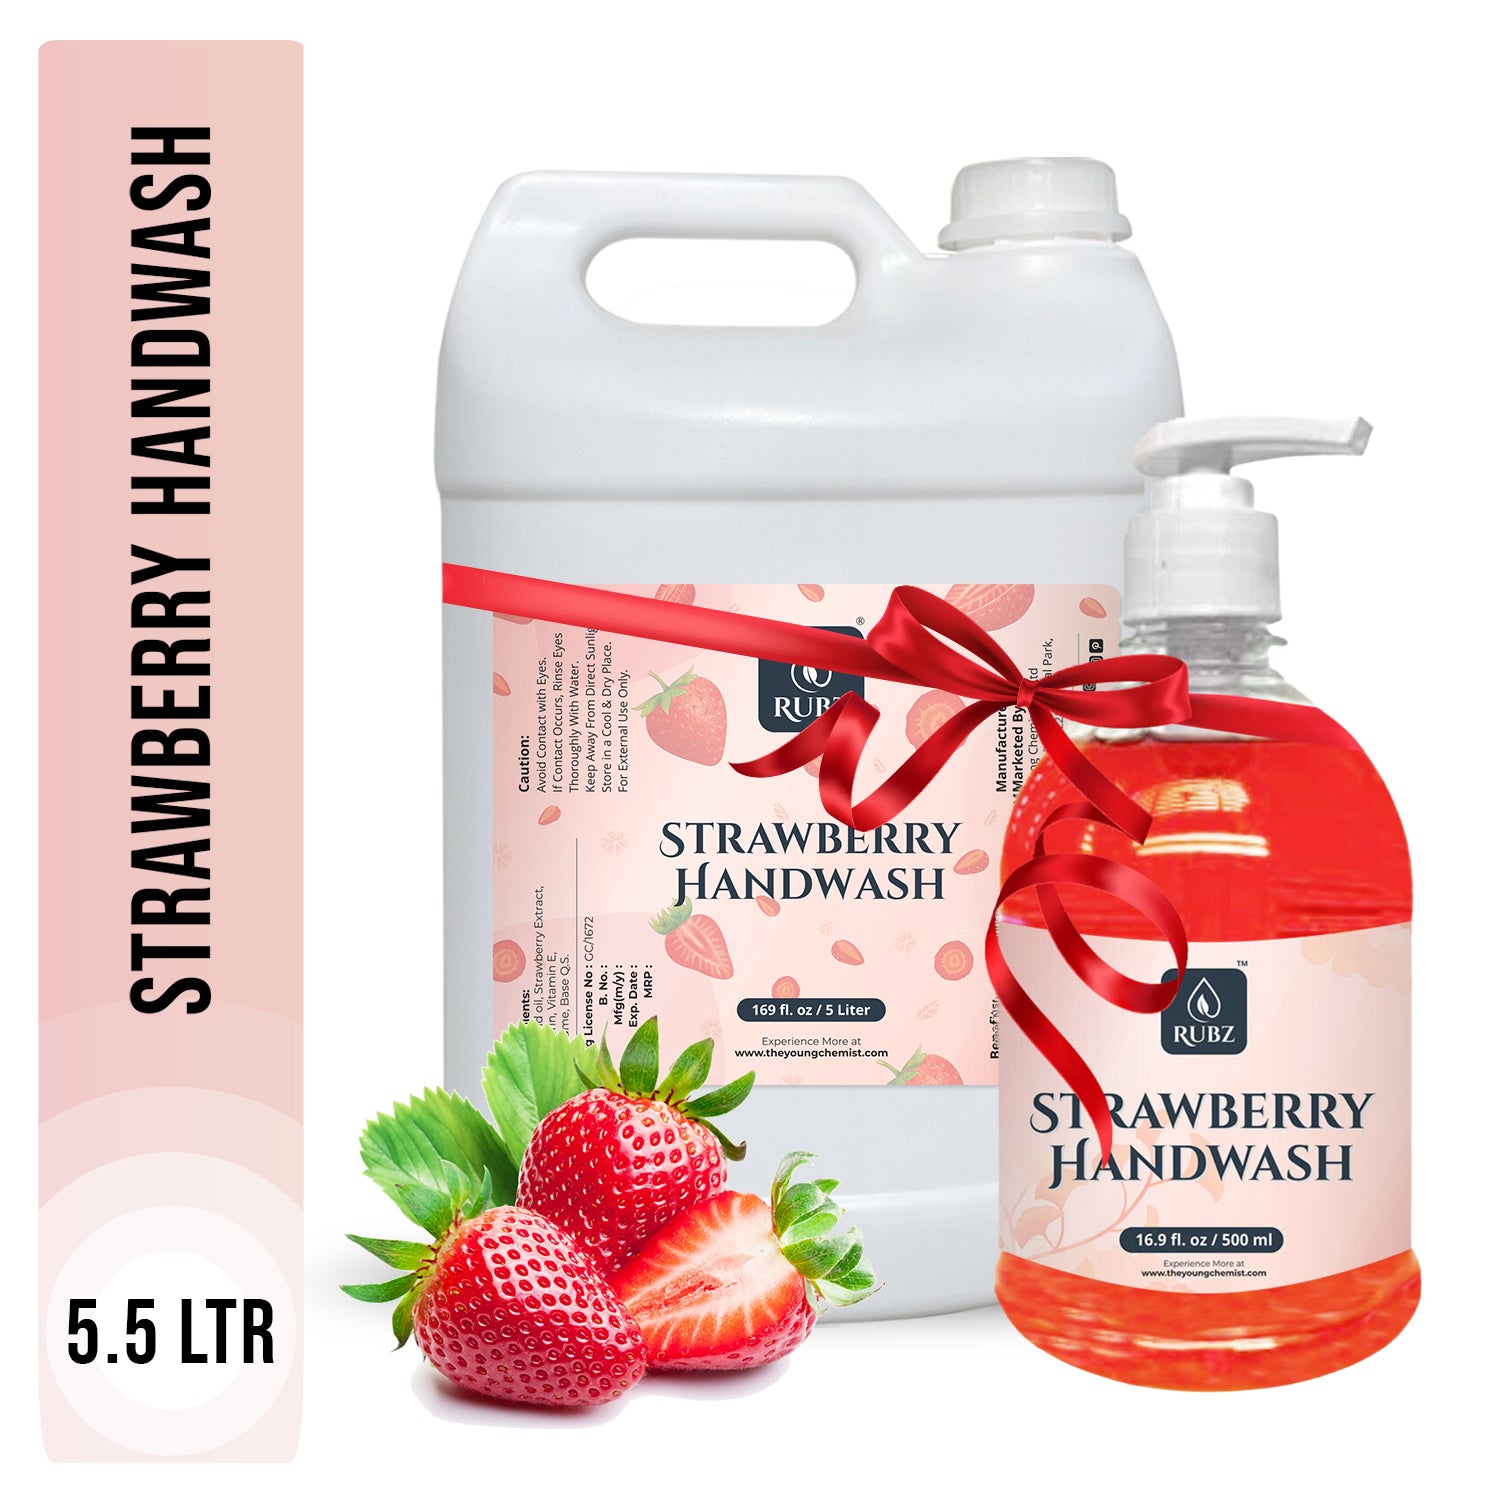 Rubz Strawberry Handwash Refill Pack 5 Litre with 500ml bottle